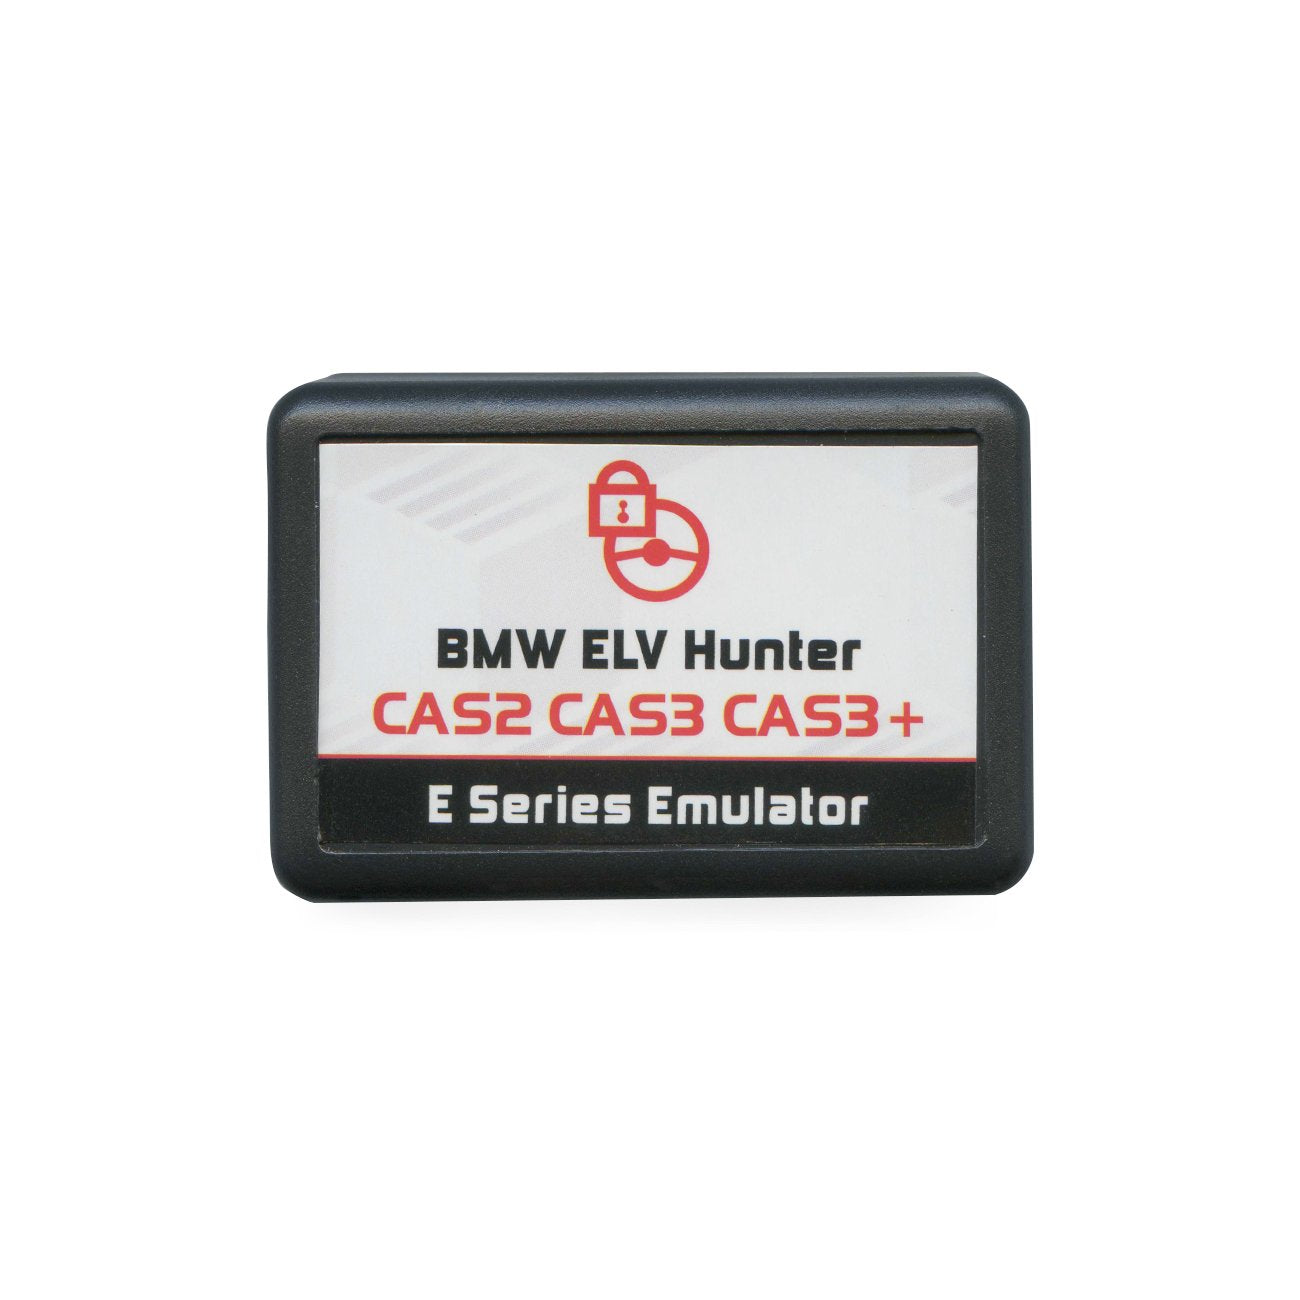 BMW ELV Hunter for CAS2 CAS3 CAS3+ all E-series Steering Lock Emulator 10pcs